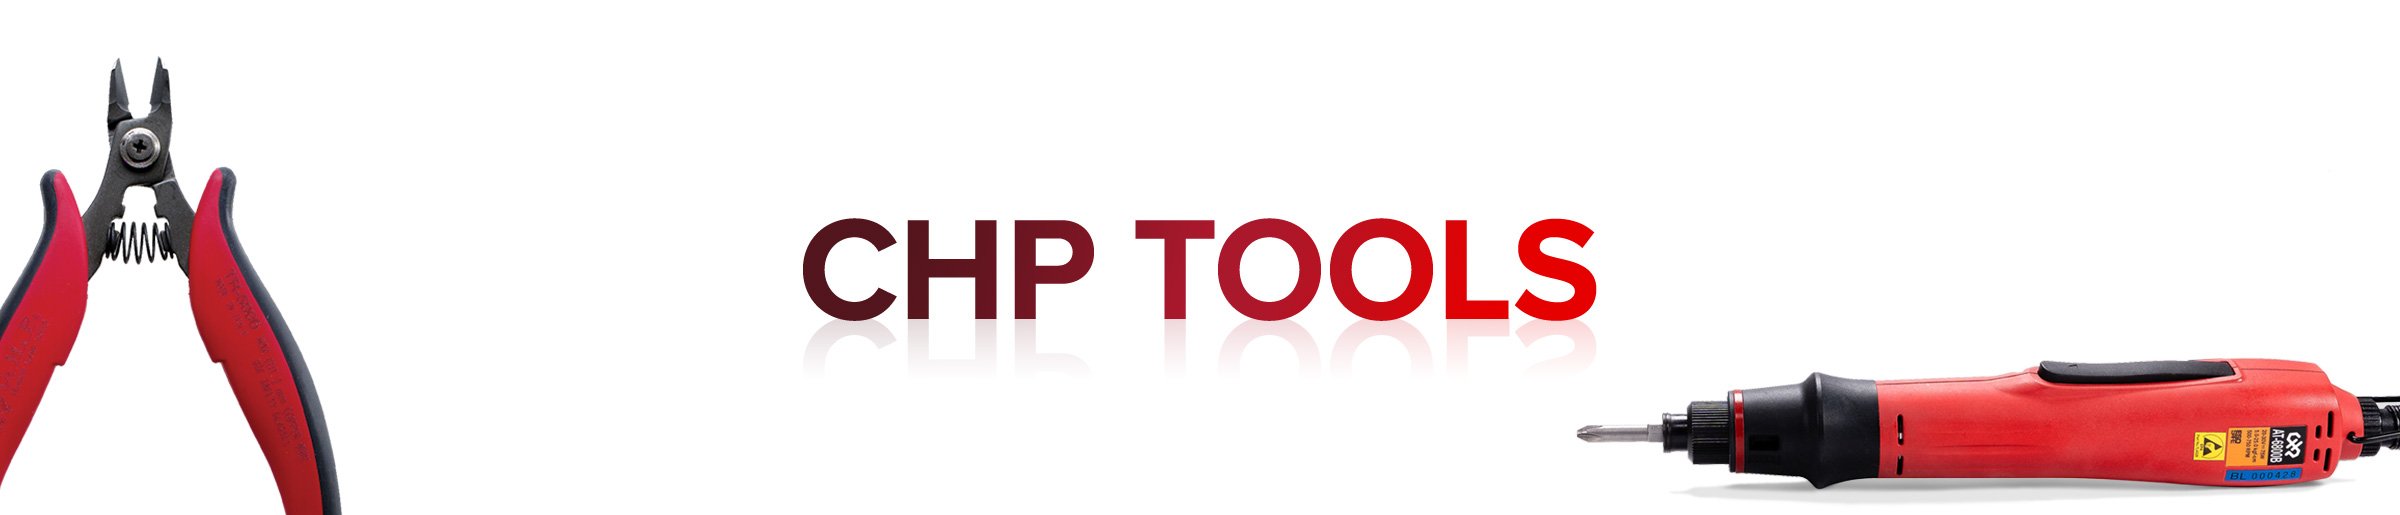 CHP Brand Tools 